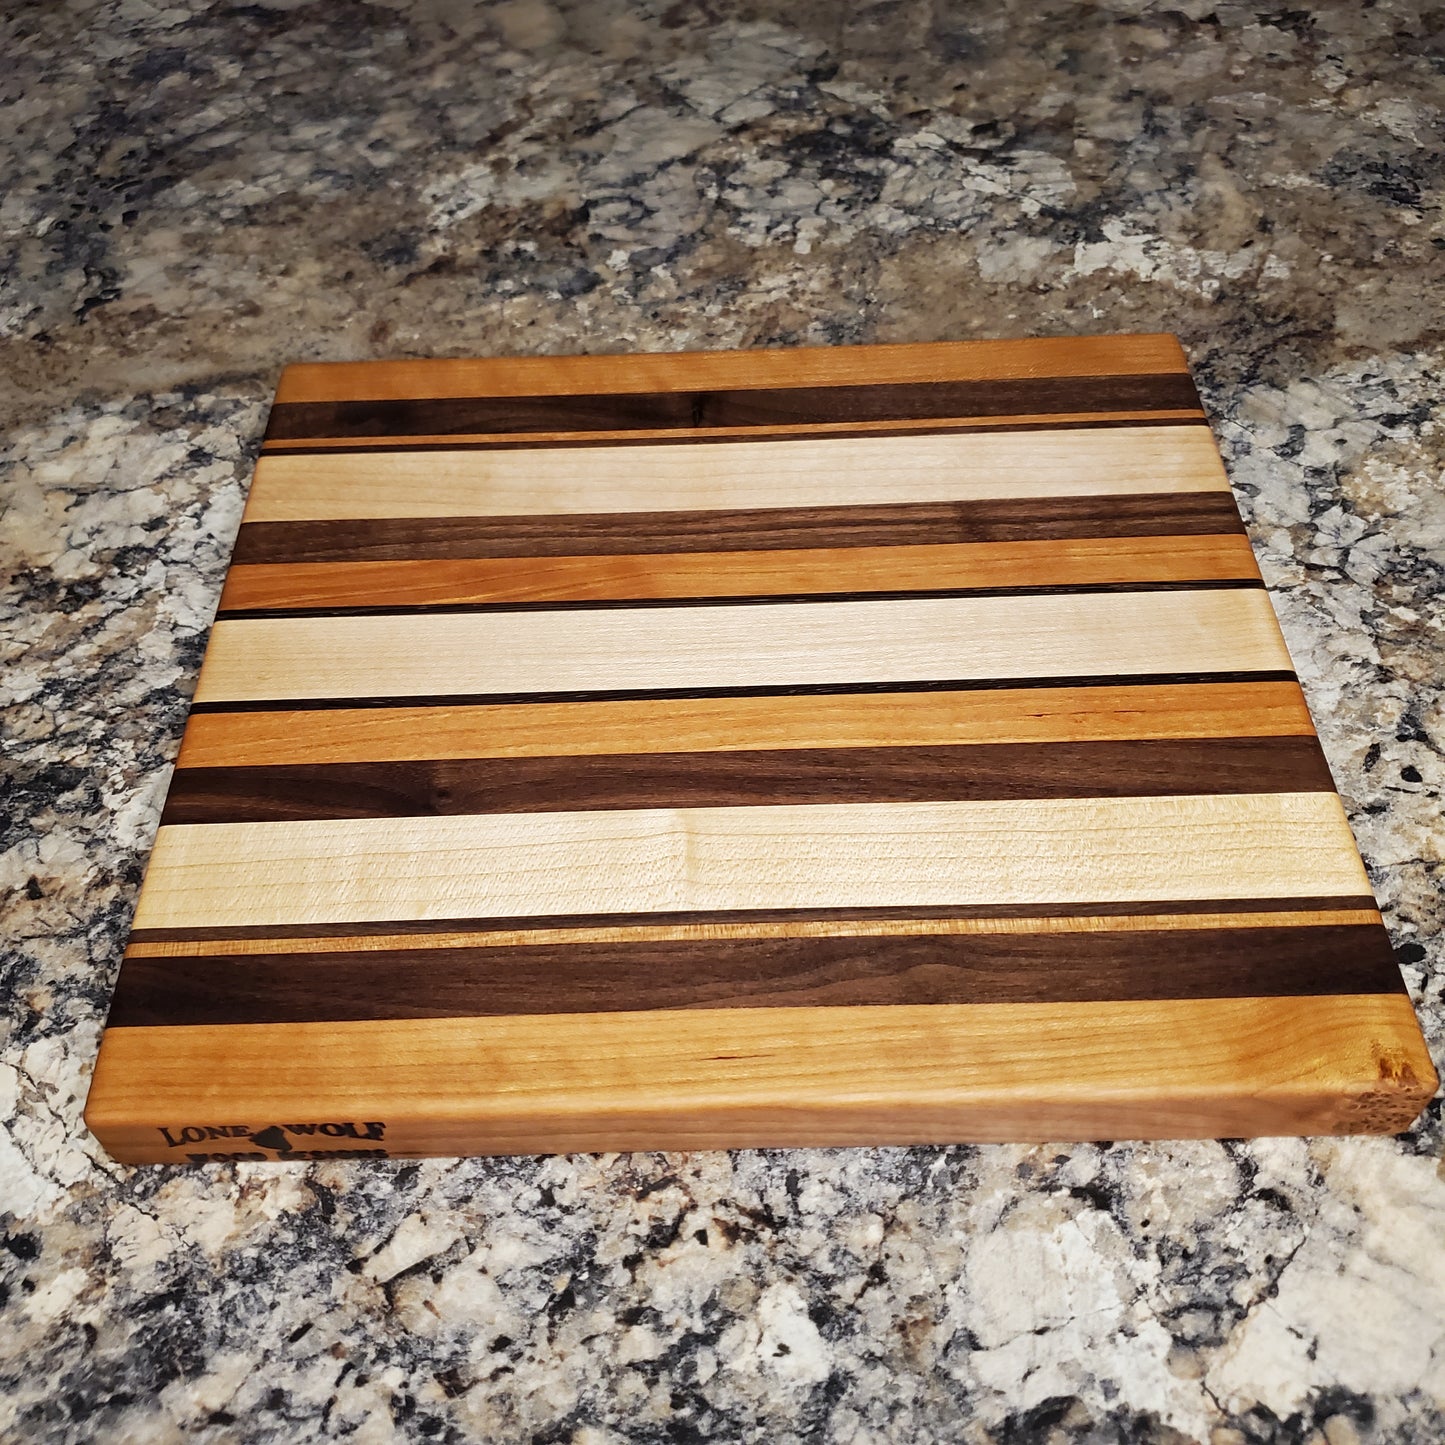 12 Wood Cutting Board – Eye For Pretty At Home